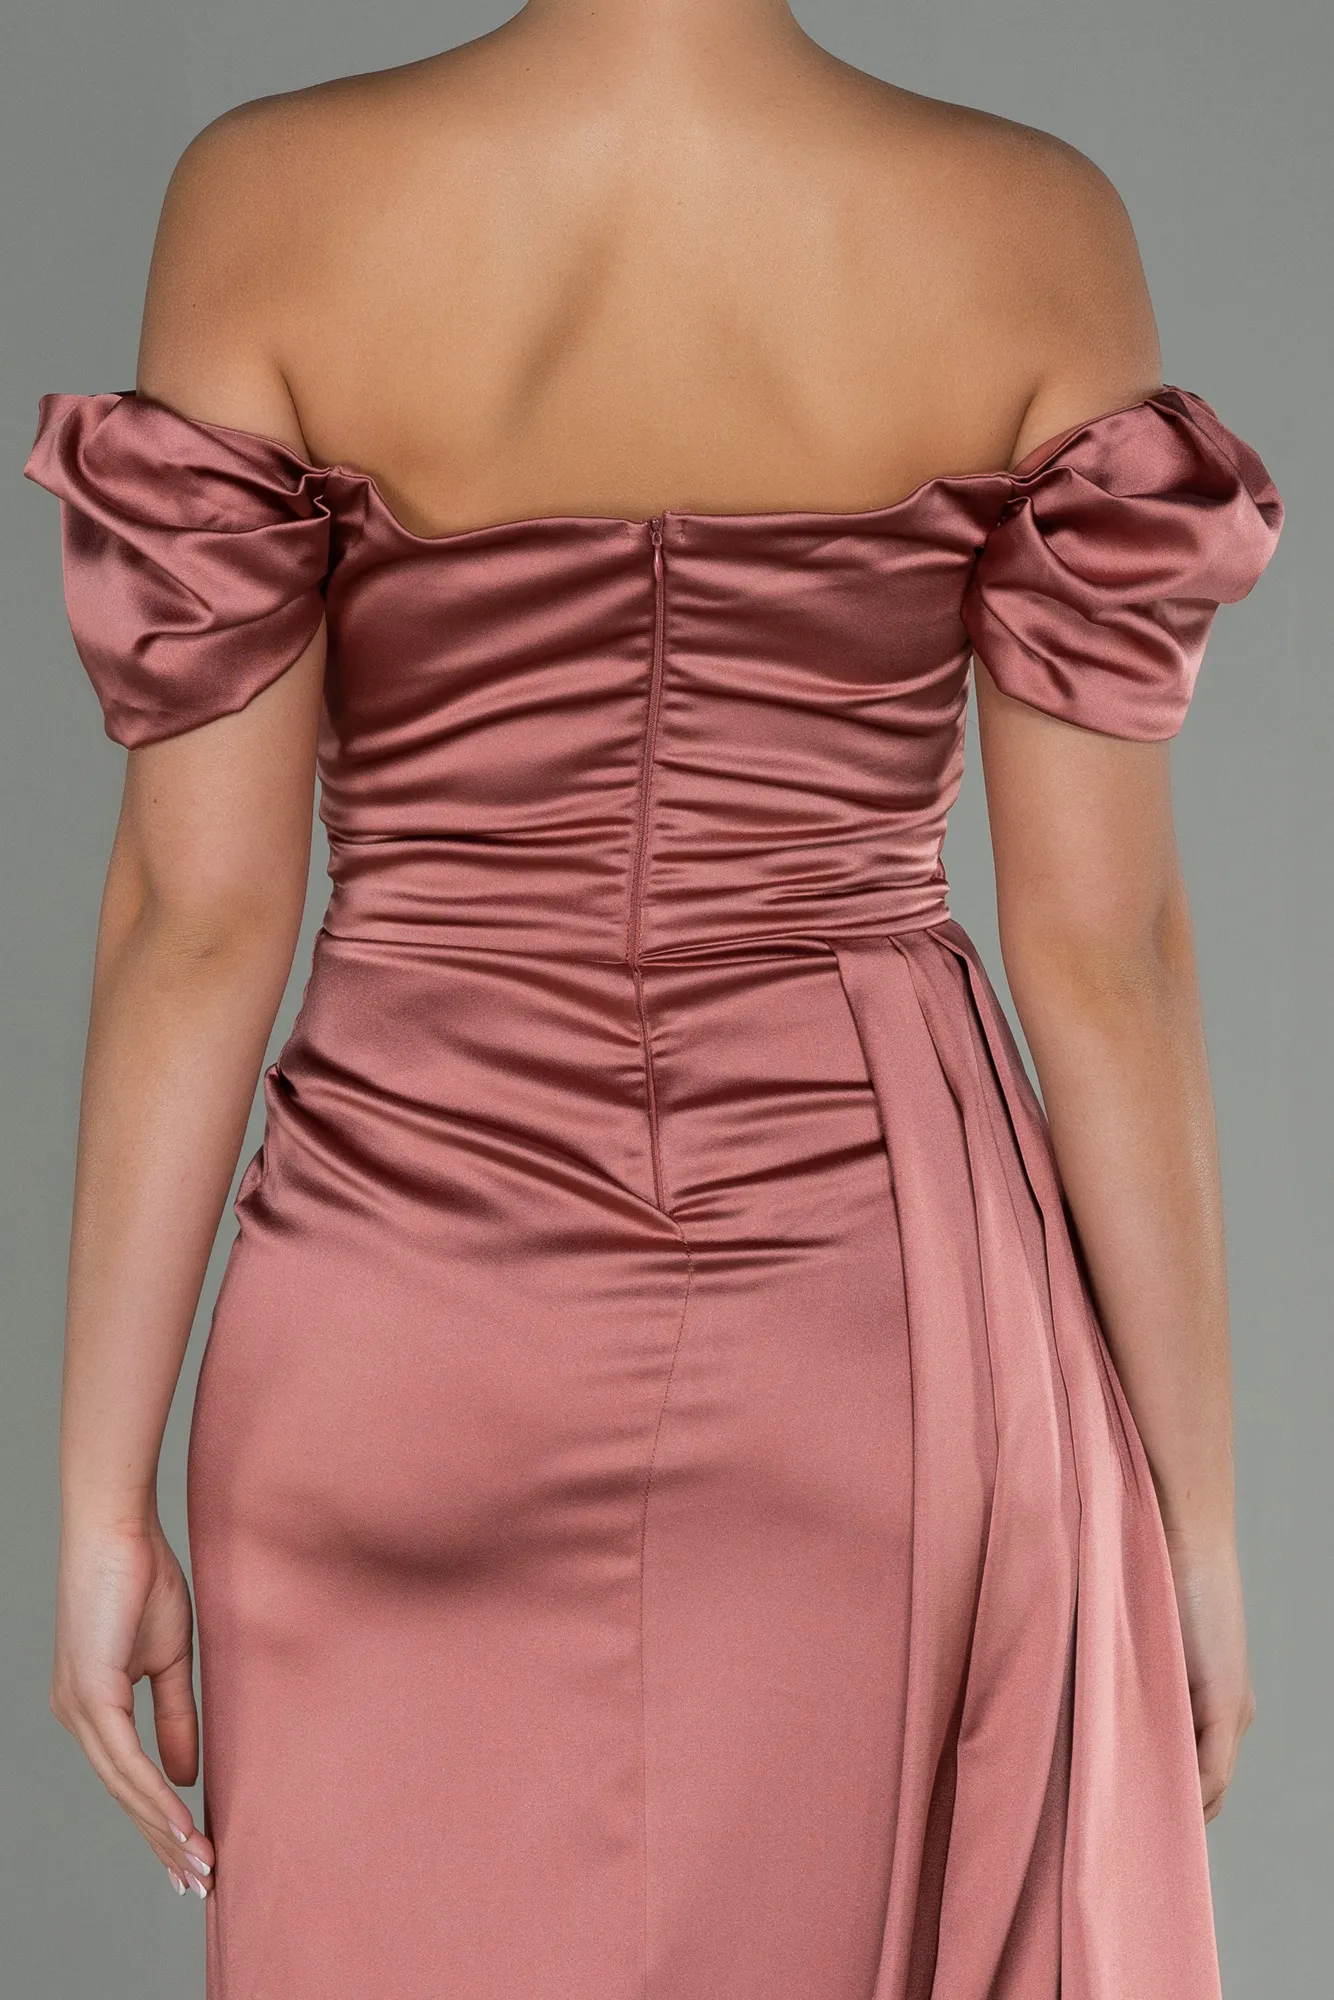 Onion Skin-Long Satin Engagement Dress ABU1606